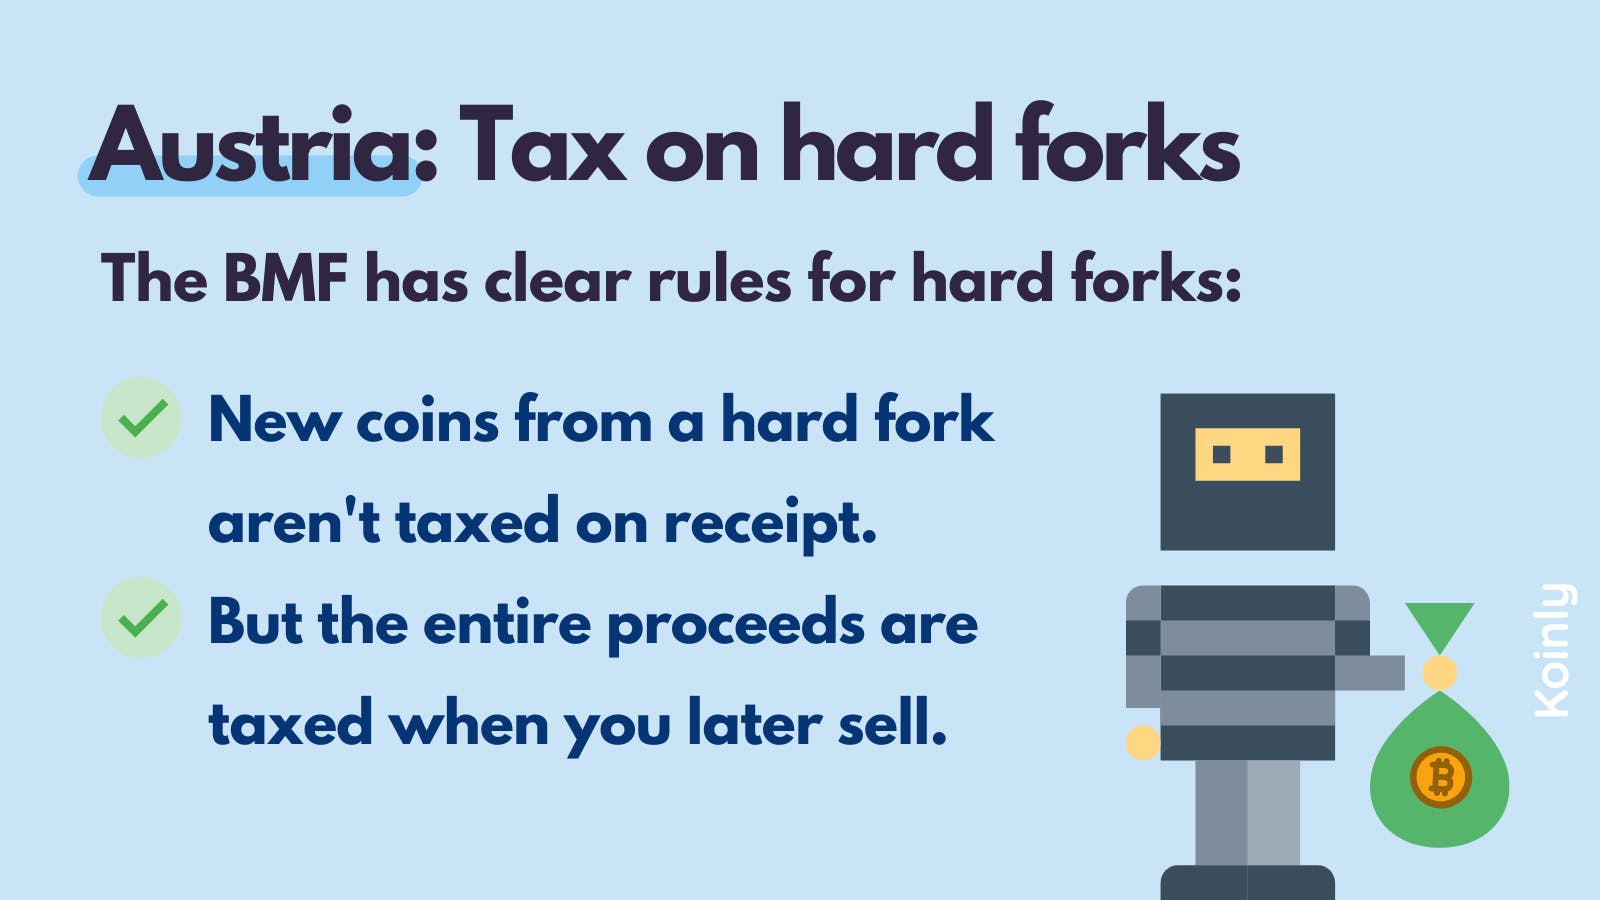 tax on hard forks in Austria